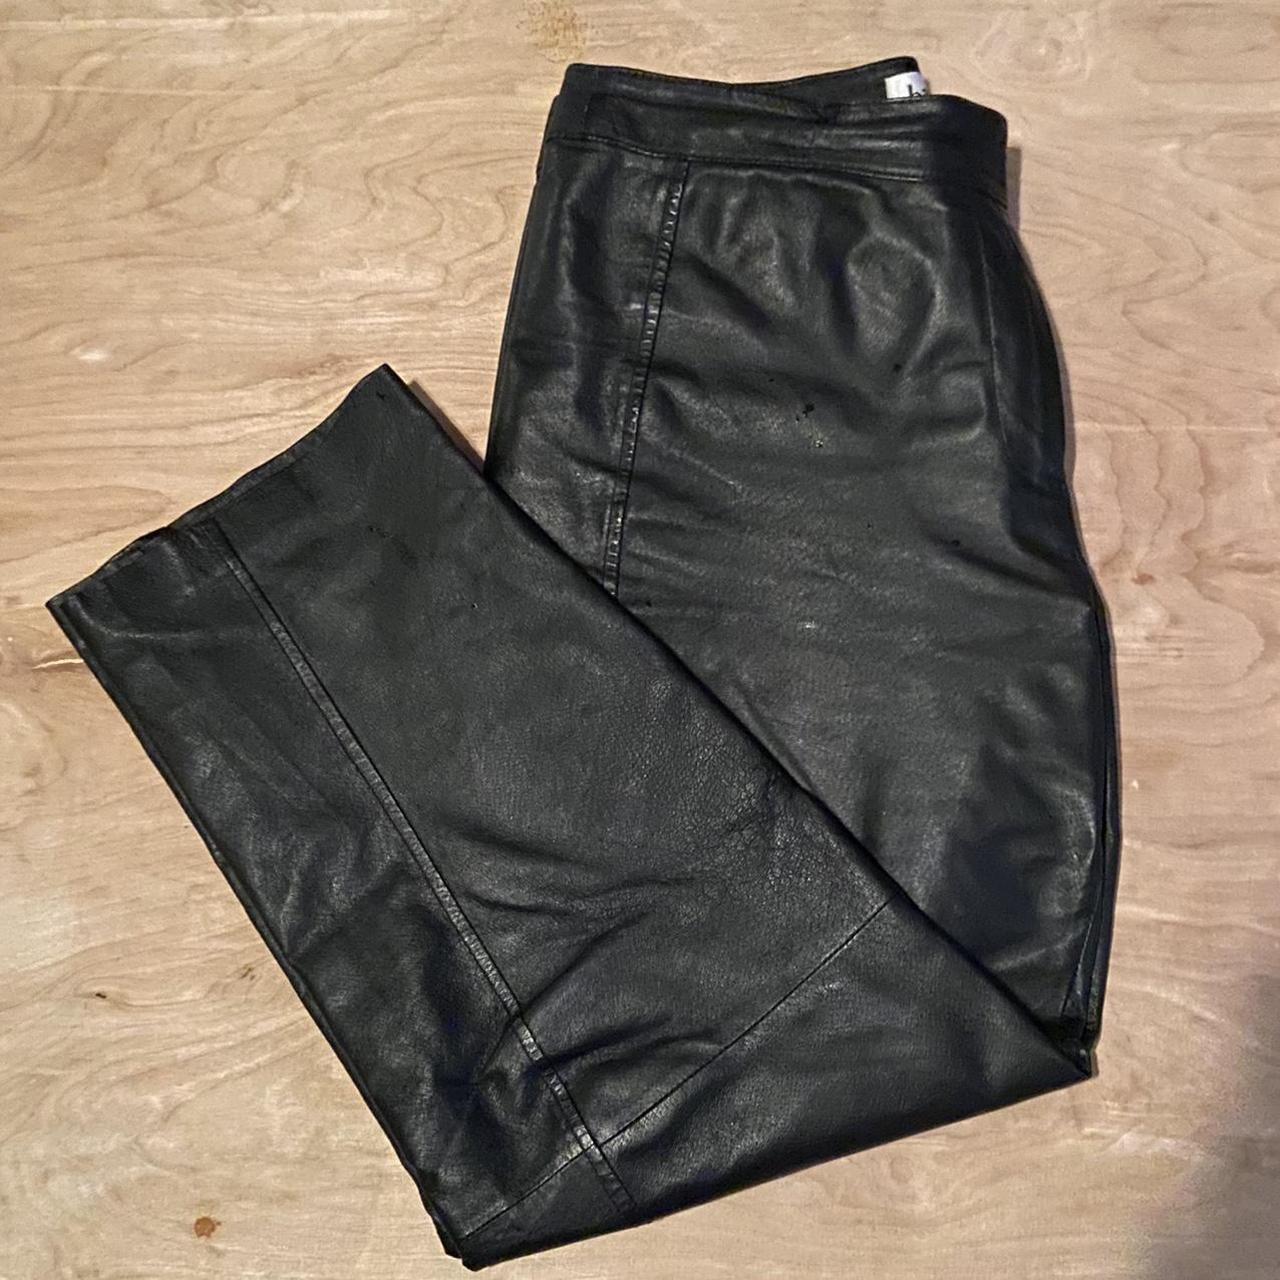 black genuine leather pants ♡ GRANDMA’S SALE 👵🏼👩🏽‍🦱... - Depop